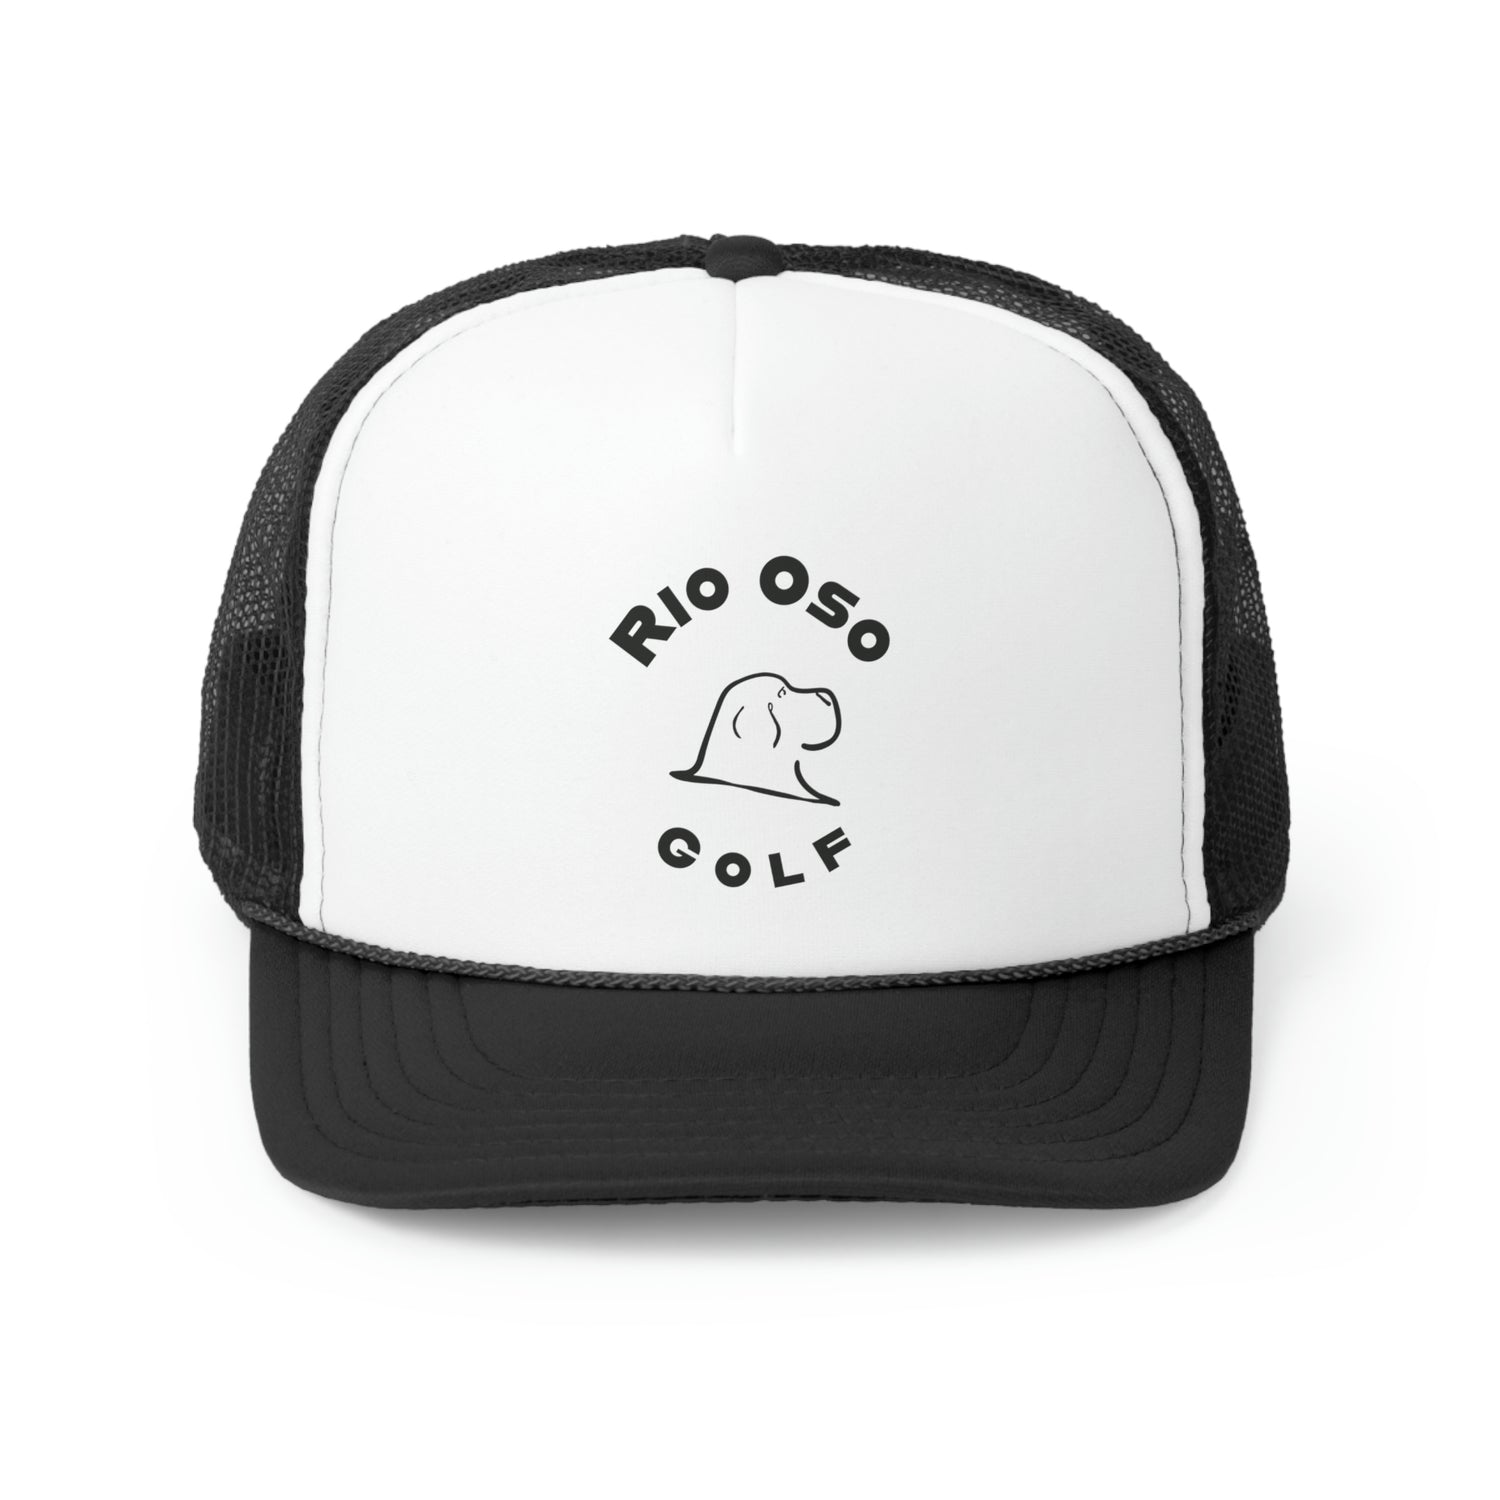 Rio Oso Golf Trucker Hat (Dog Logo )